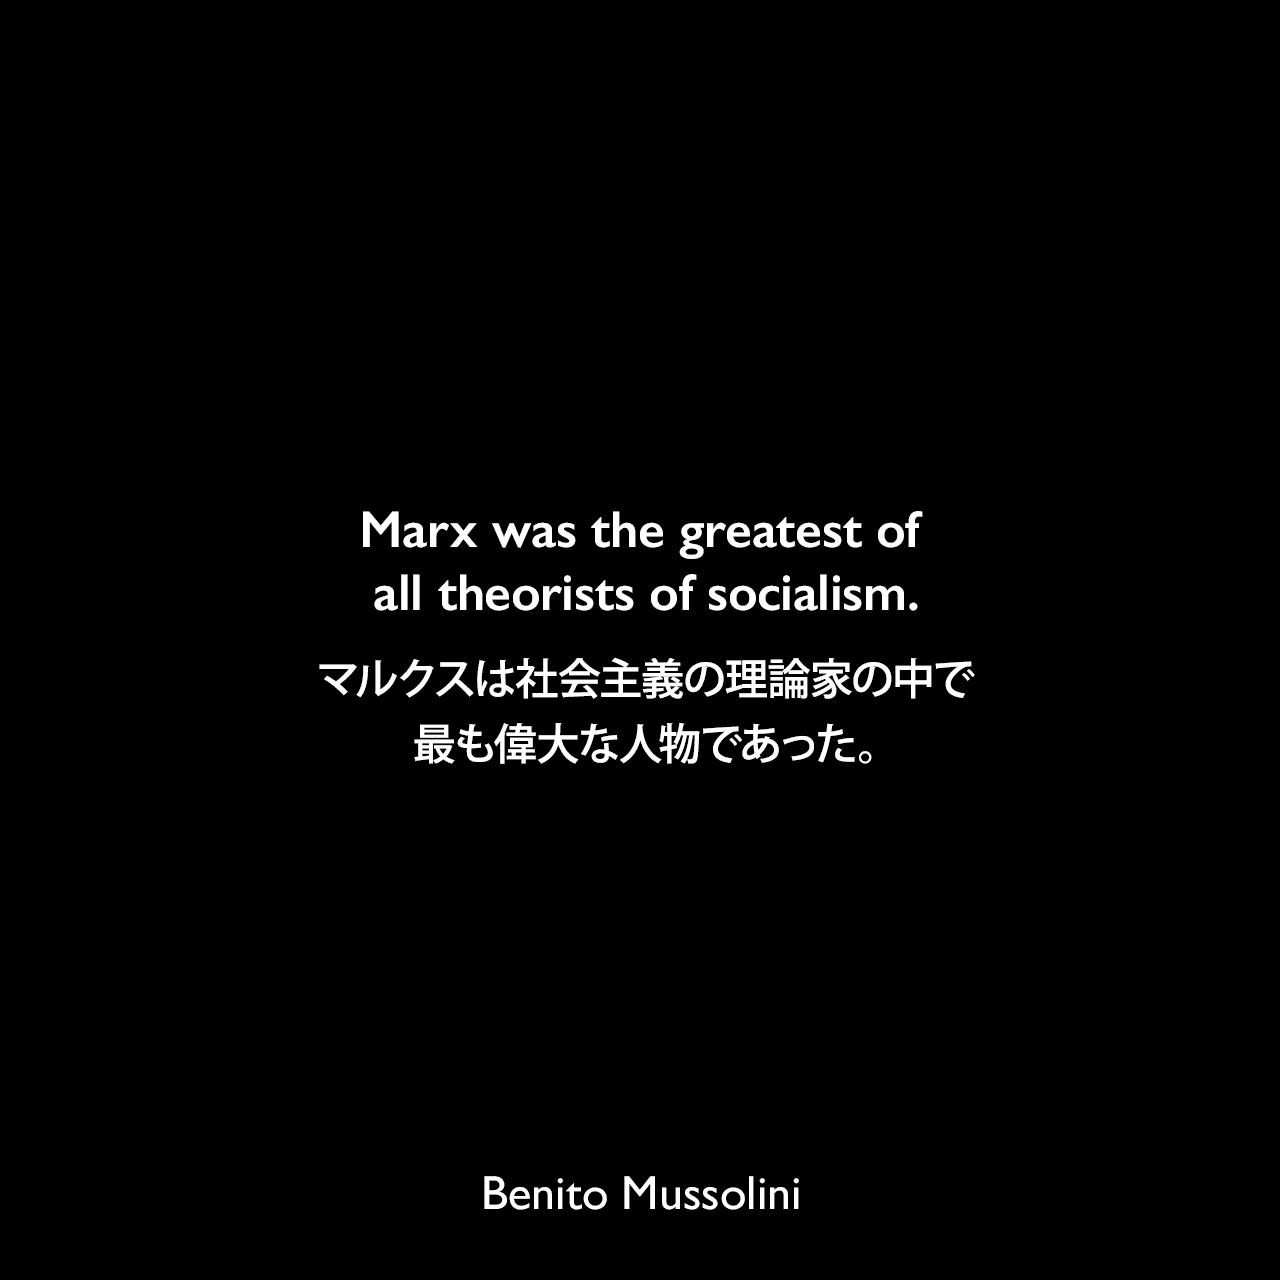 Marx was the greatest of all theorists of socialism.マルクスは社会主義の理論家の中で最も偉大な人物であった。- ムッソリーニによる本「Opera omnia di Benito Mussolini」よりBenito Mussolini